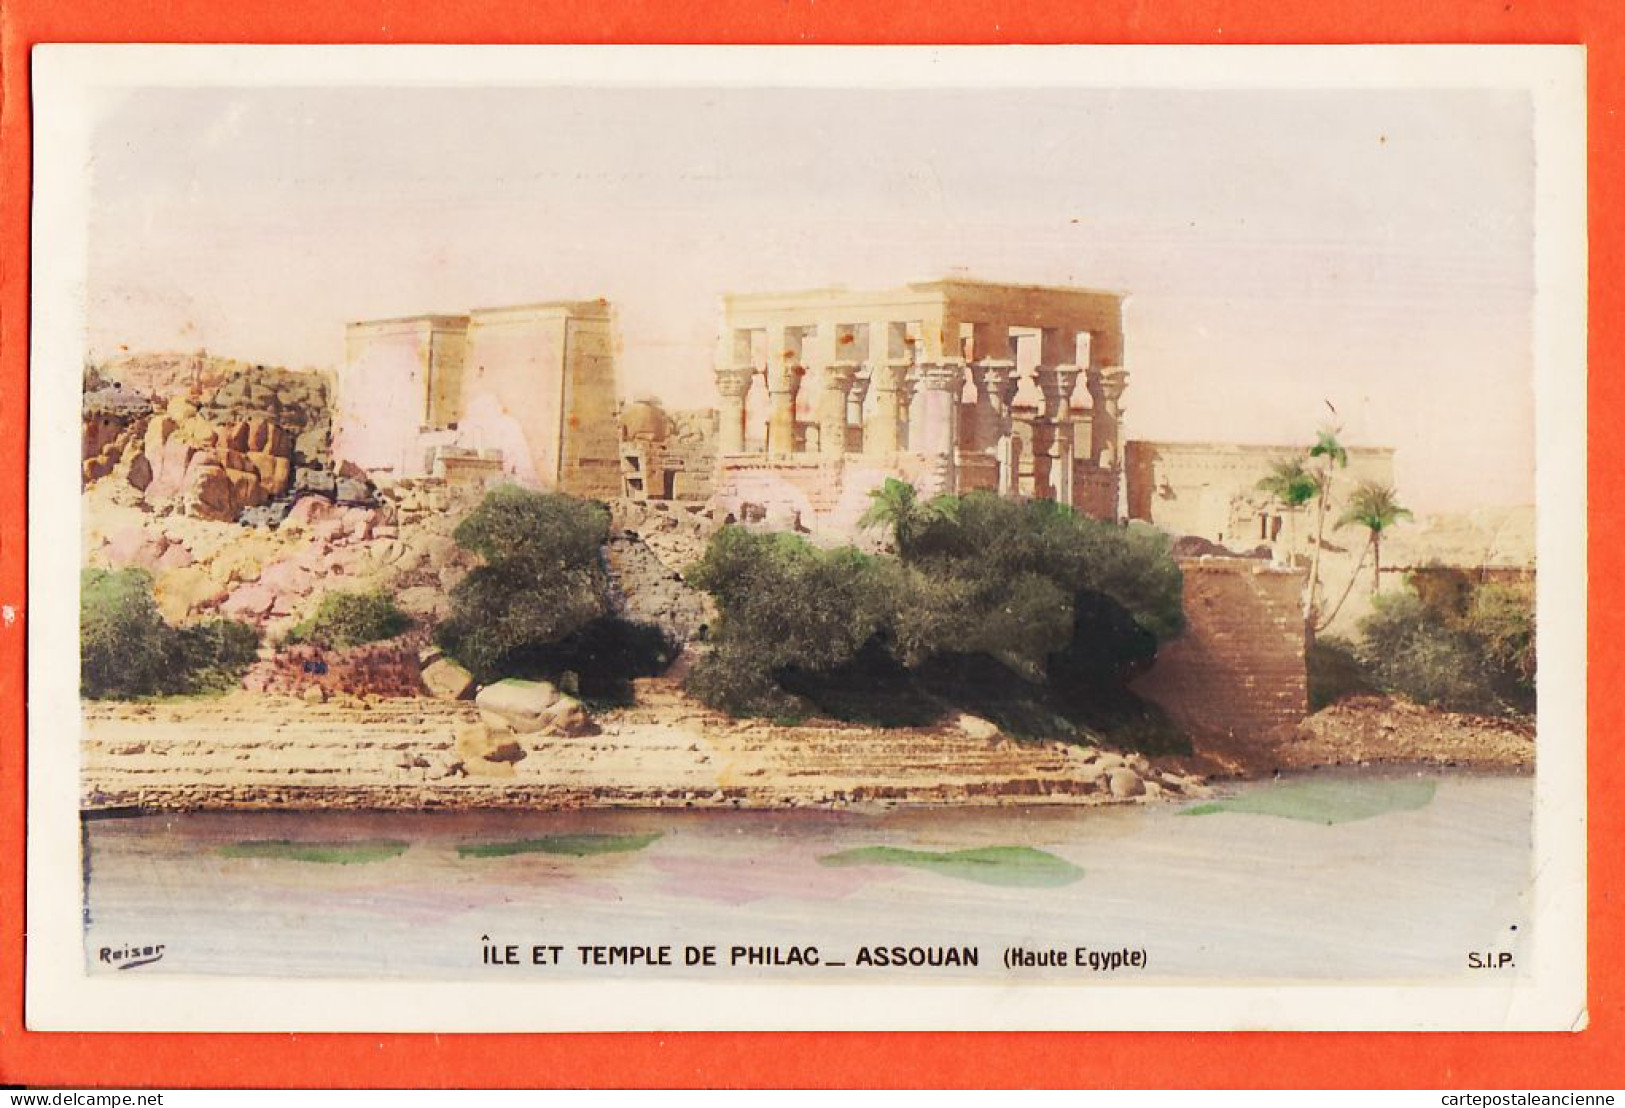 29577 / ⭐ ◉ ASSOUAN ILE Temple PHILAC (1) Ägypten Island Philae Kiosk Egypte Egypt 1905s Photo-Bromure REISER S.I.P - Assuan